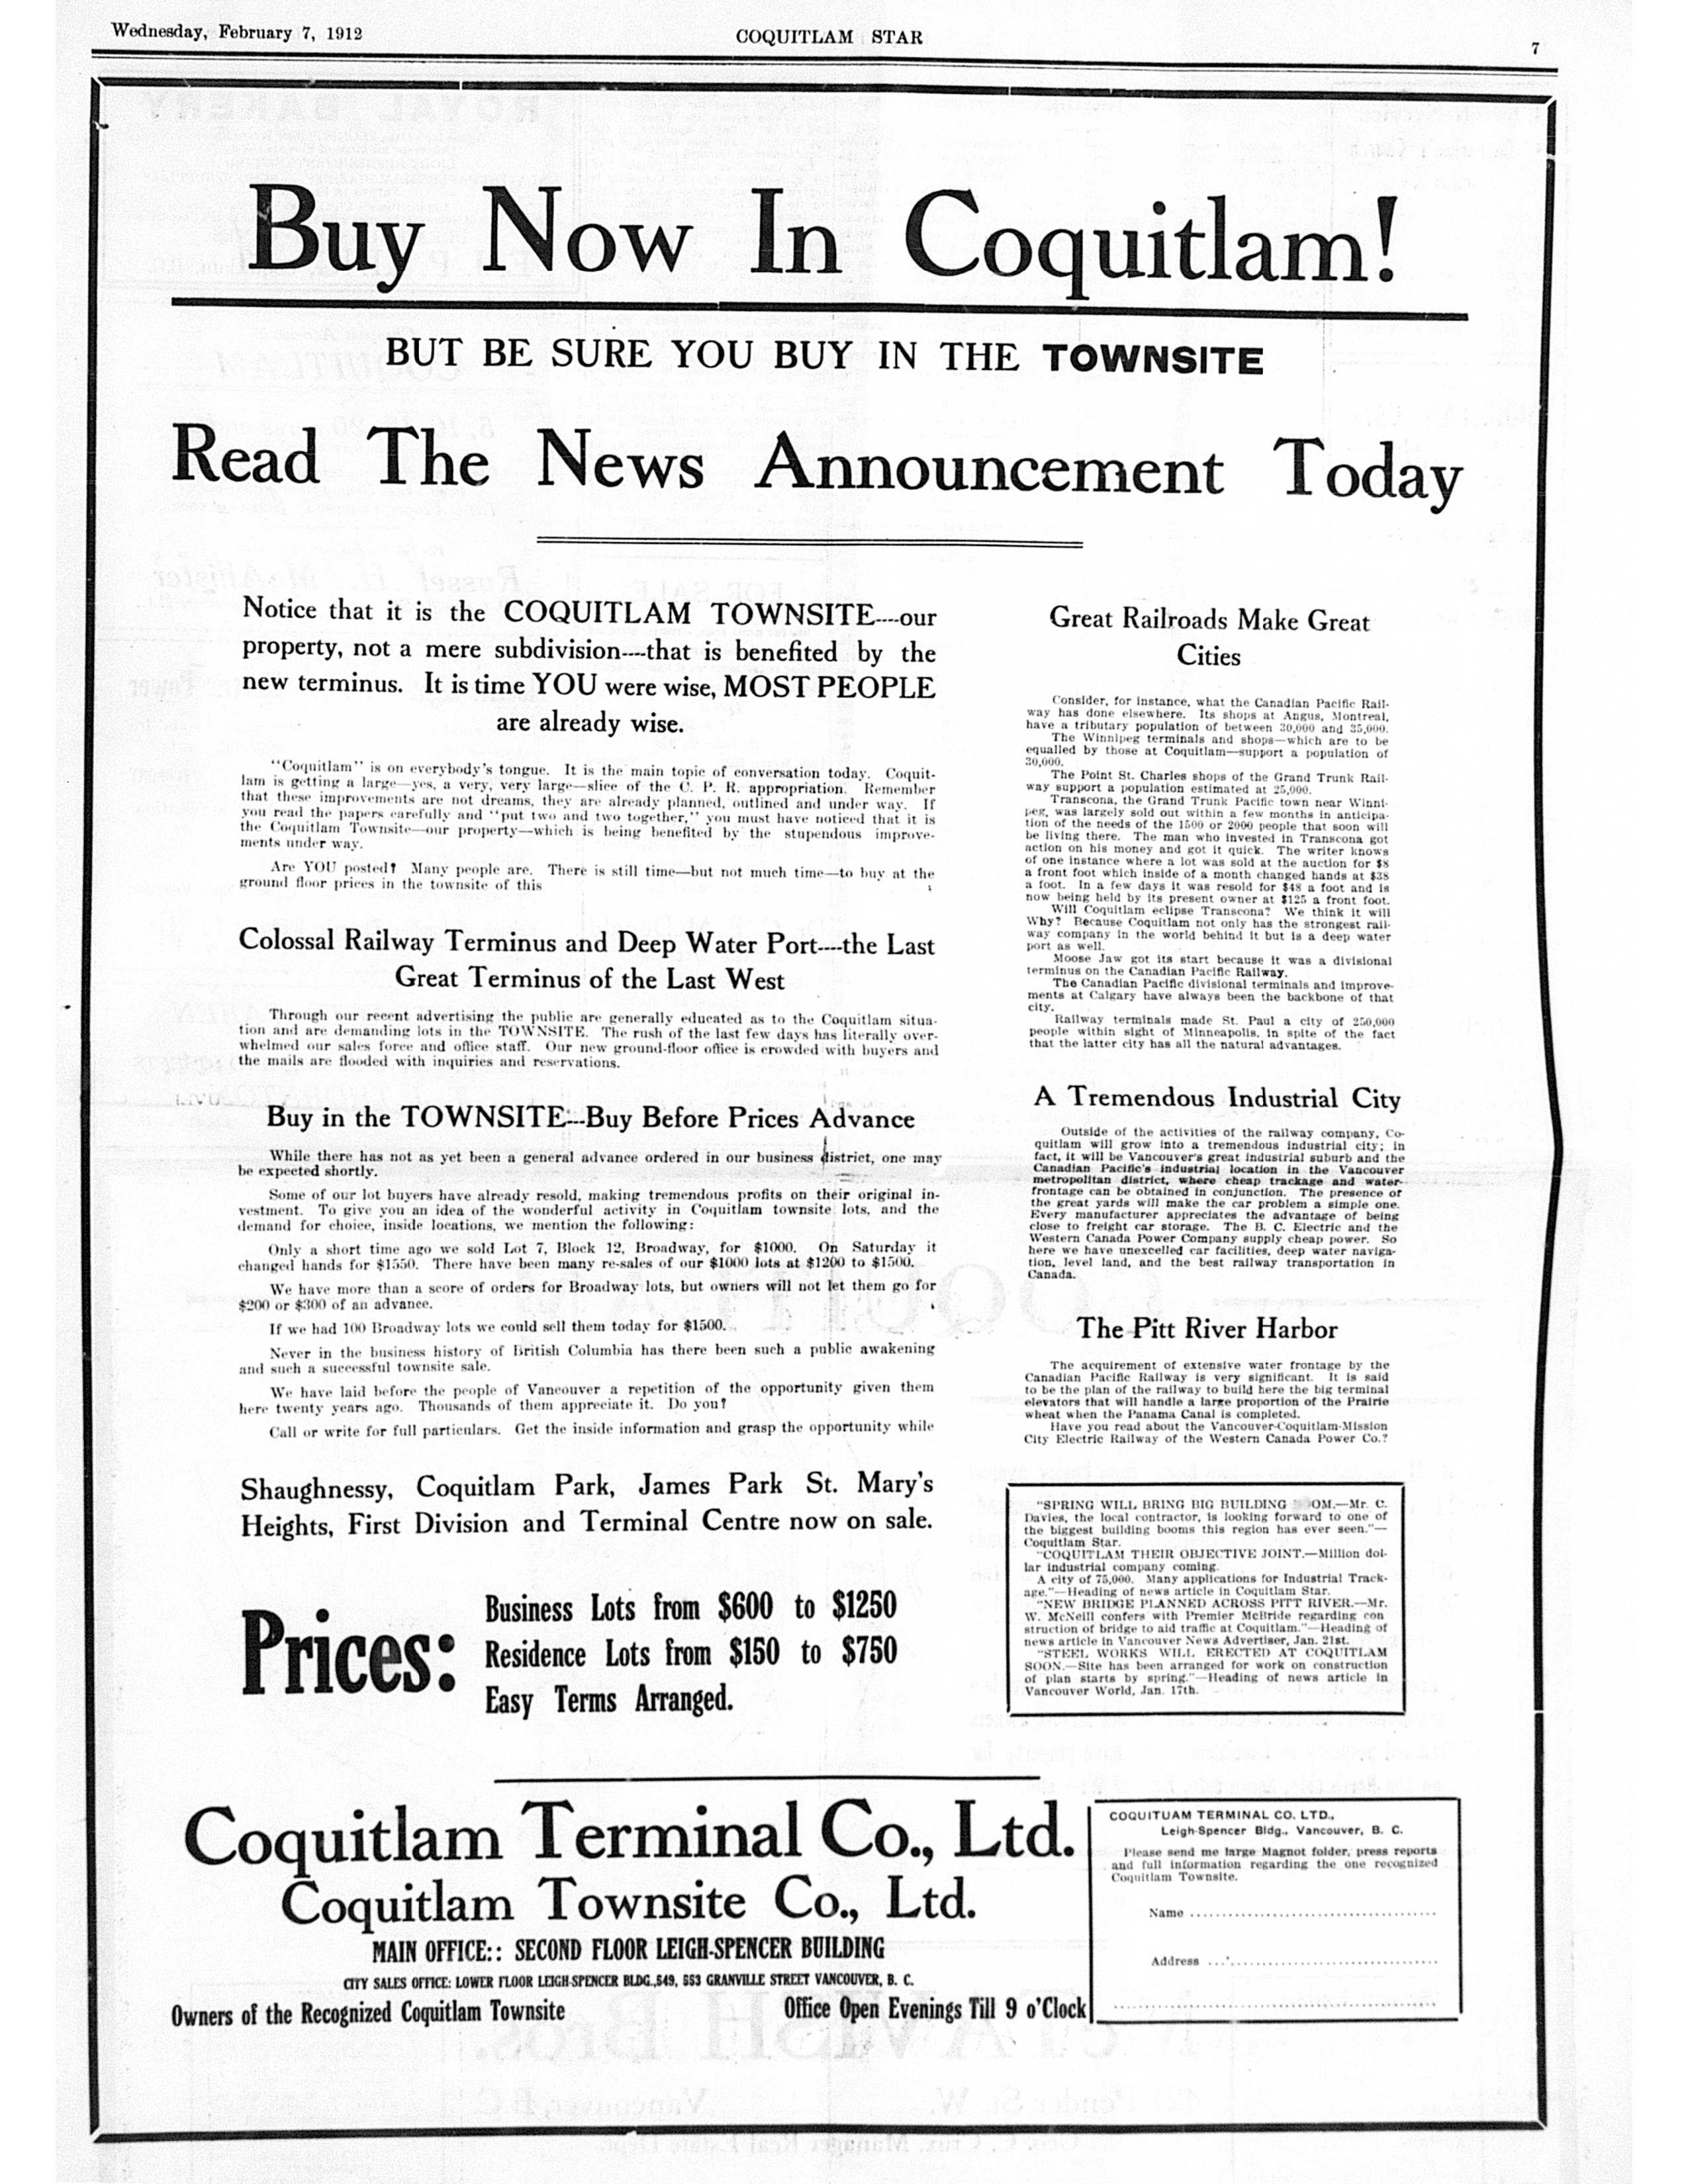 Advertisement, Coquitlam Star, 1913 (JPG) Opens in new window